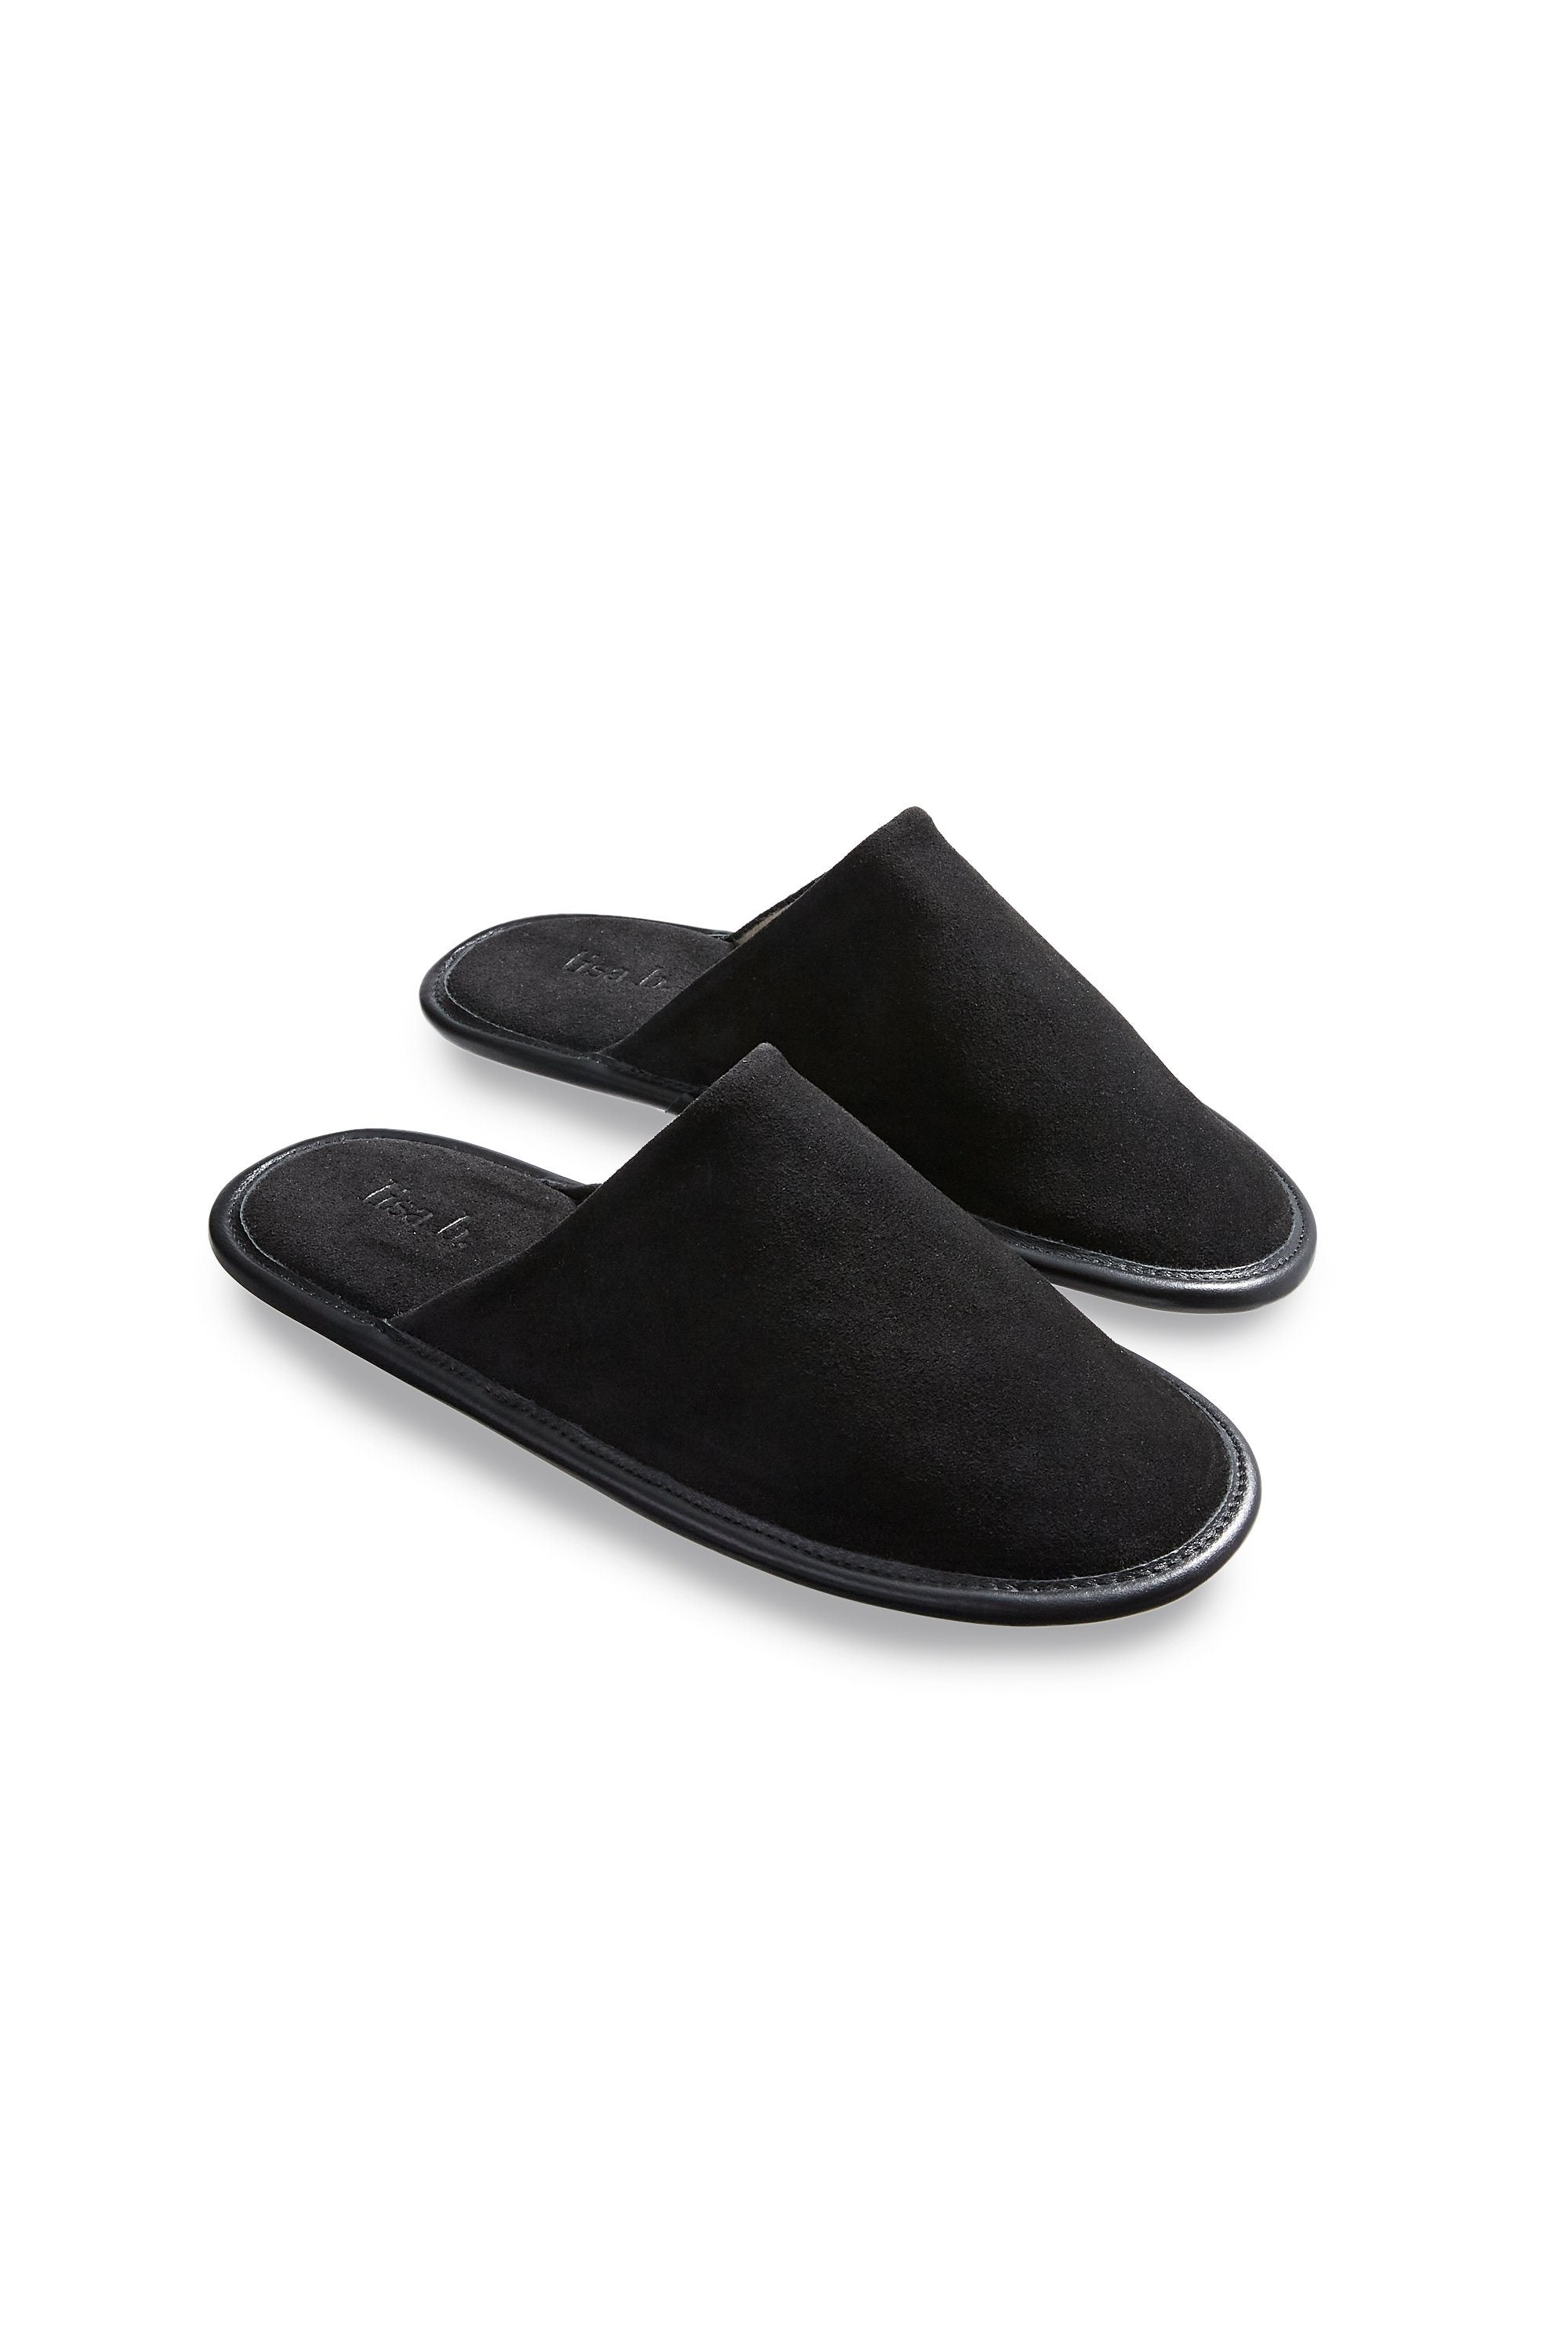 women's black suede slippers Slippers lisa b. black small 36/37 (US 6-7) 